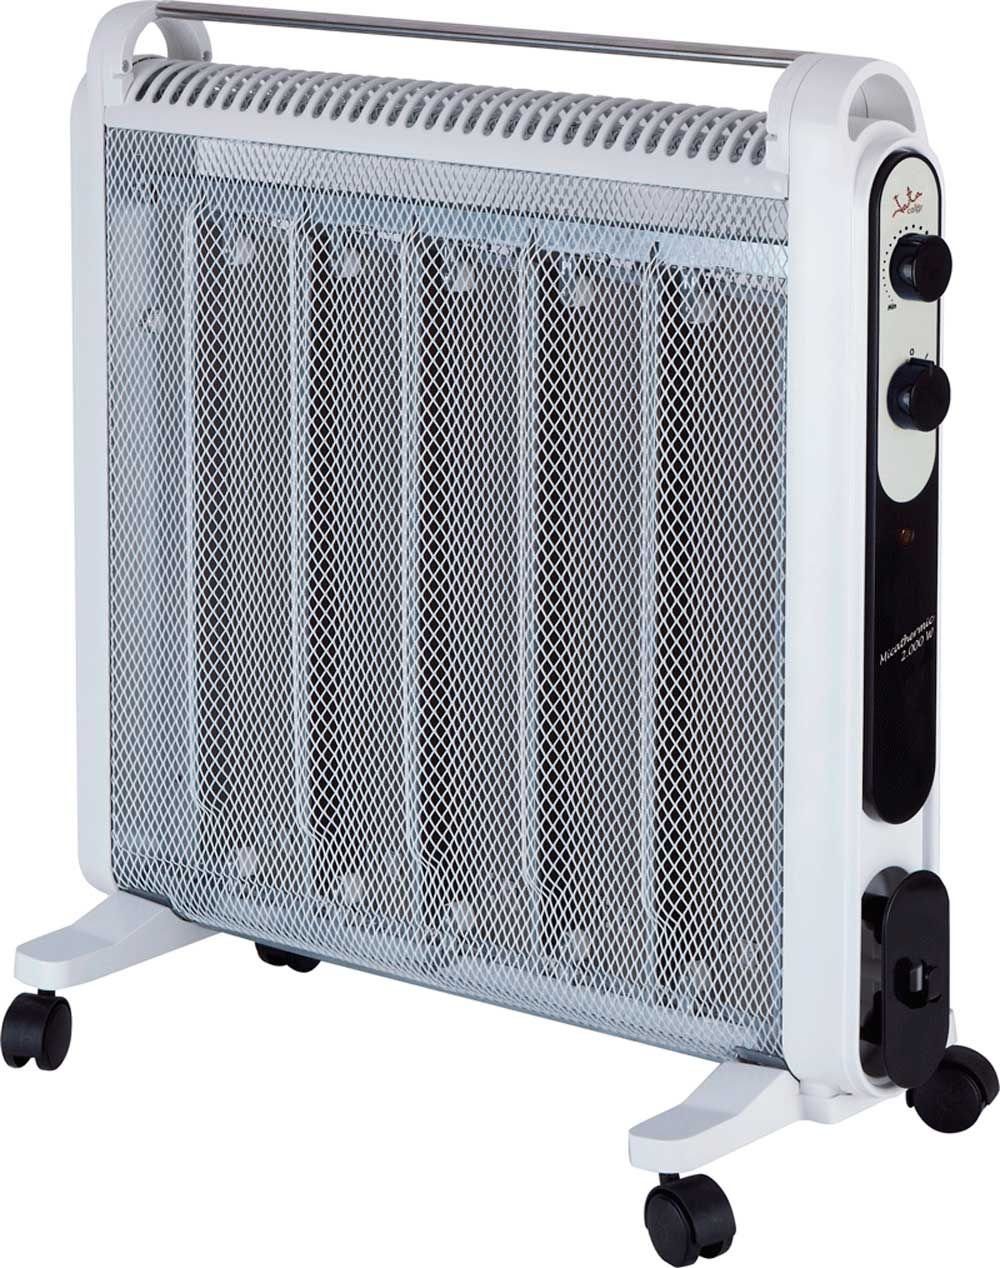 Jata Heizgerät Micathermic Heater RD227B 2000W, 2000 W, Leise, Lautlos, Sparsam, Energie sparen, Elektroheizung